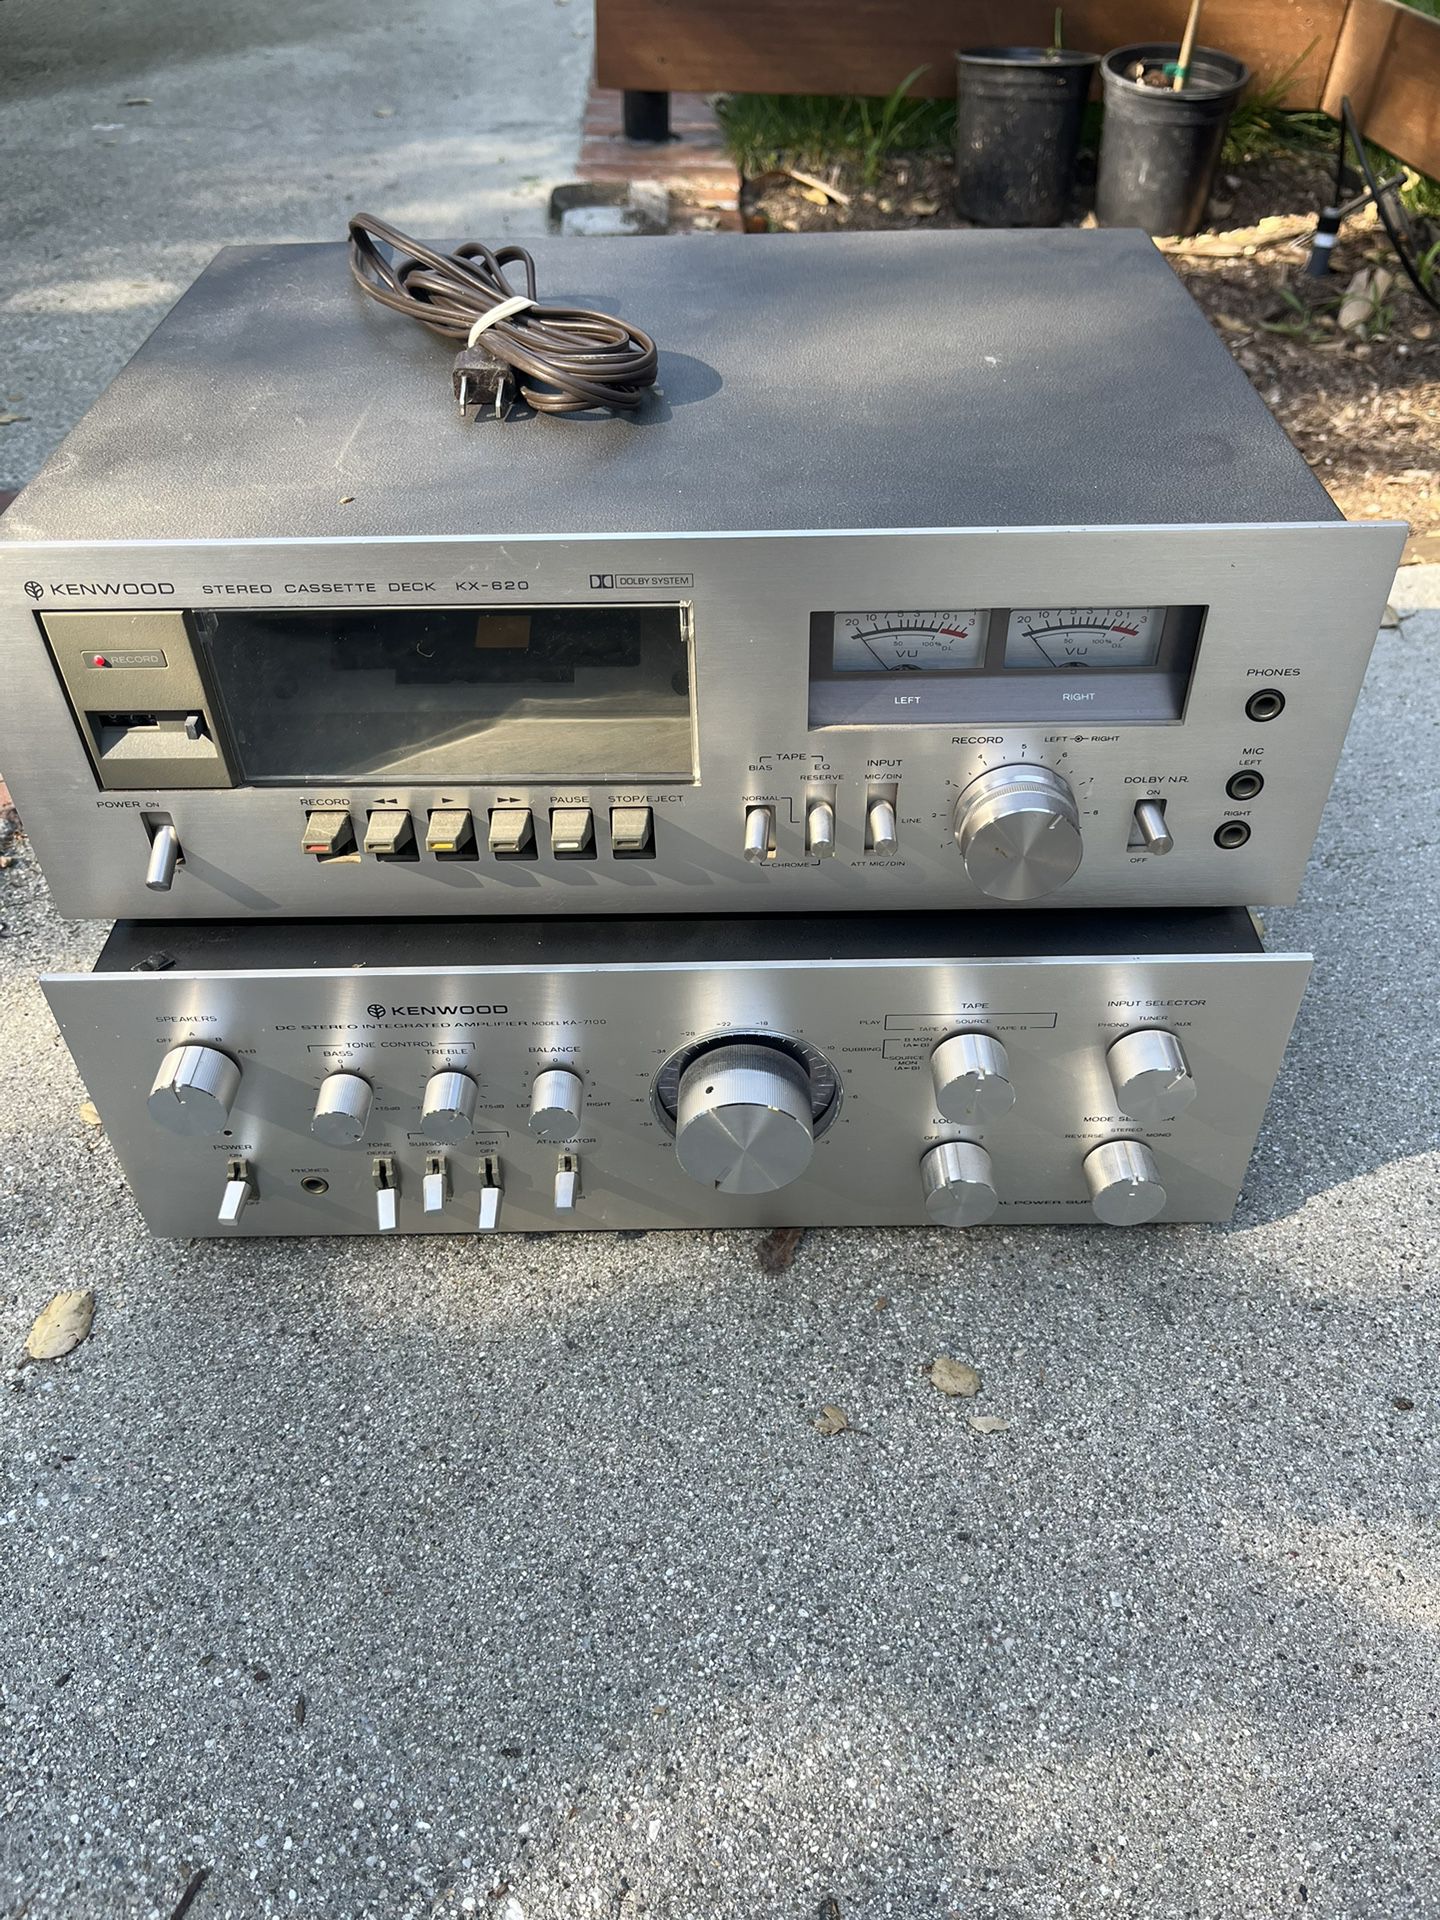 Kenwood KX-7100 Integrated Amplifier And Kenwood KX-620 Cassette deck